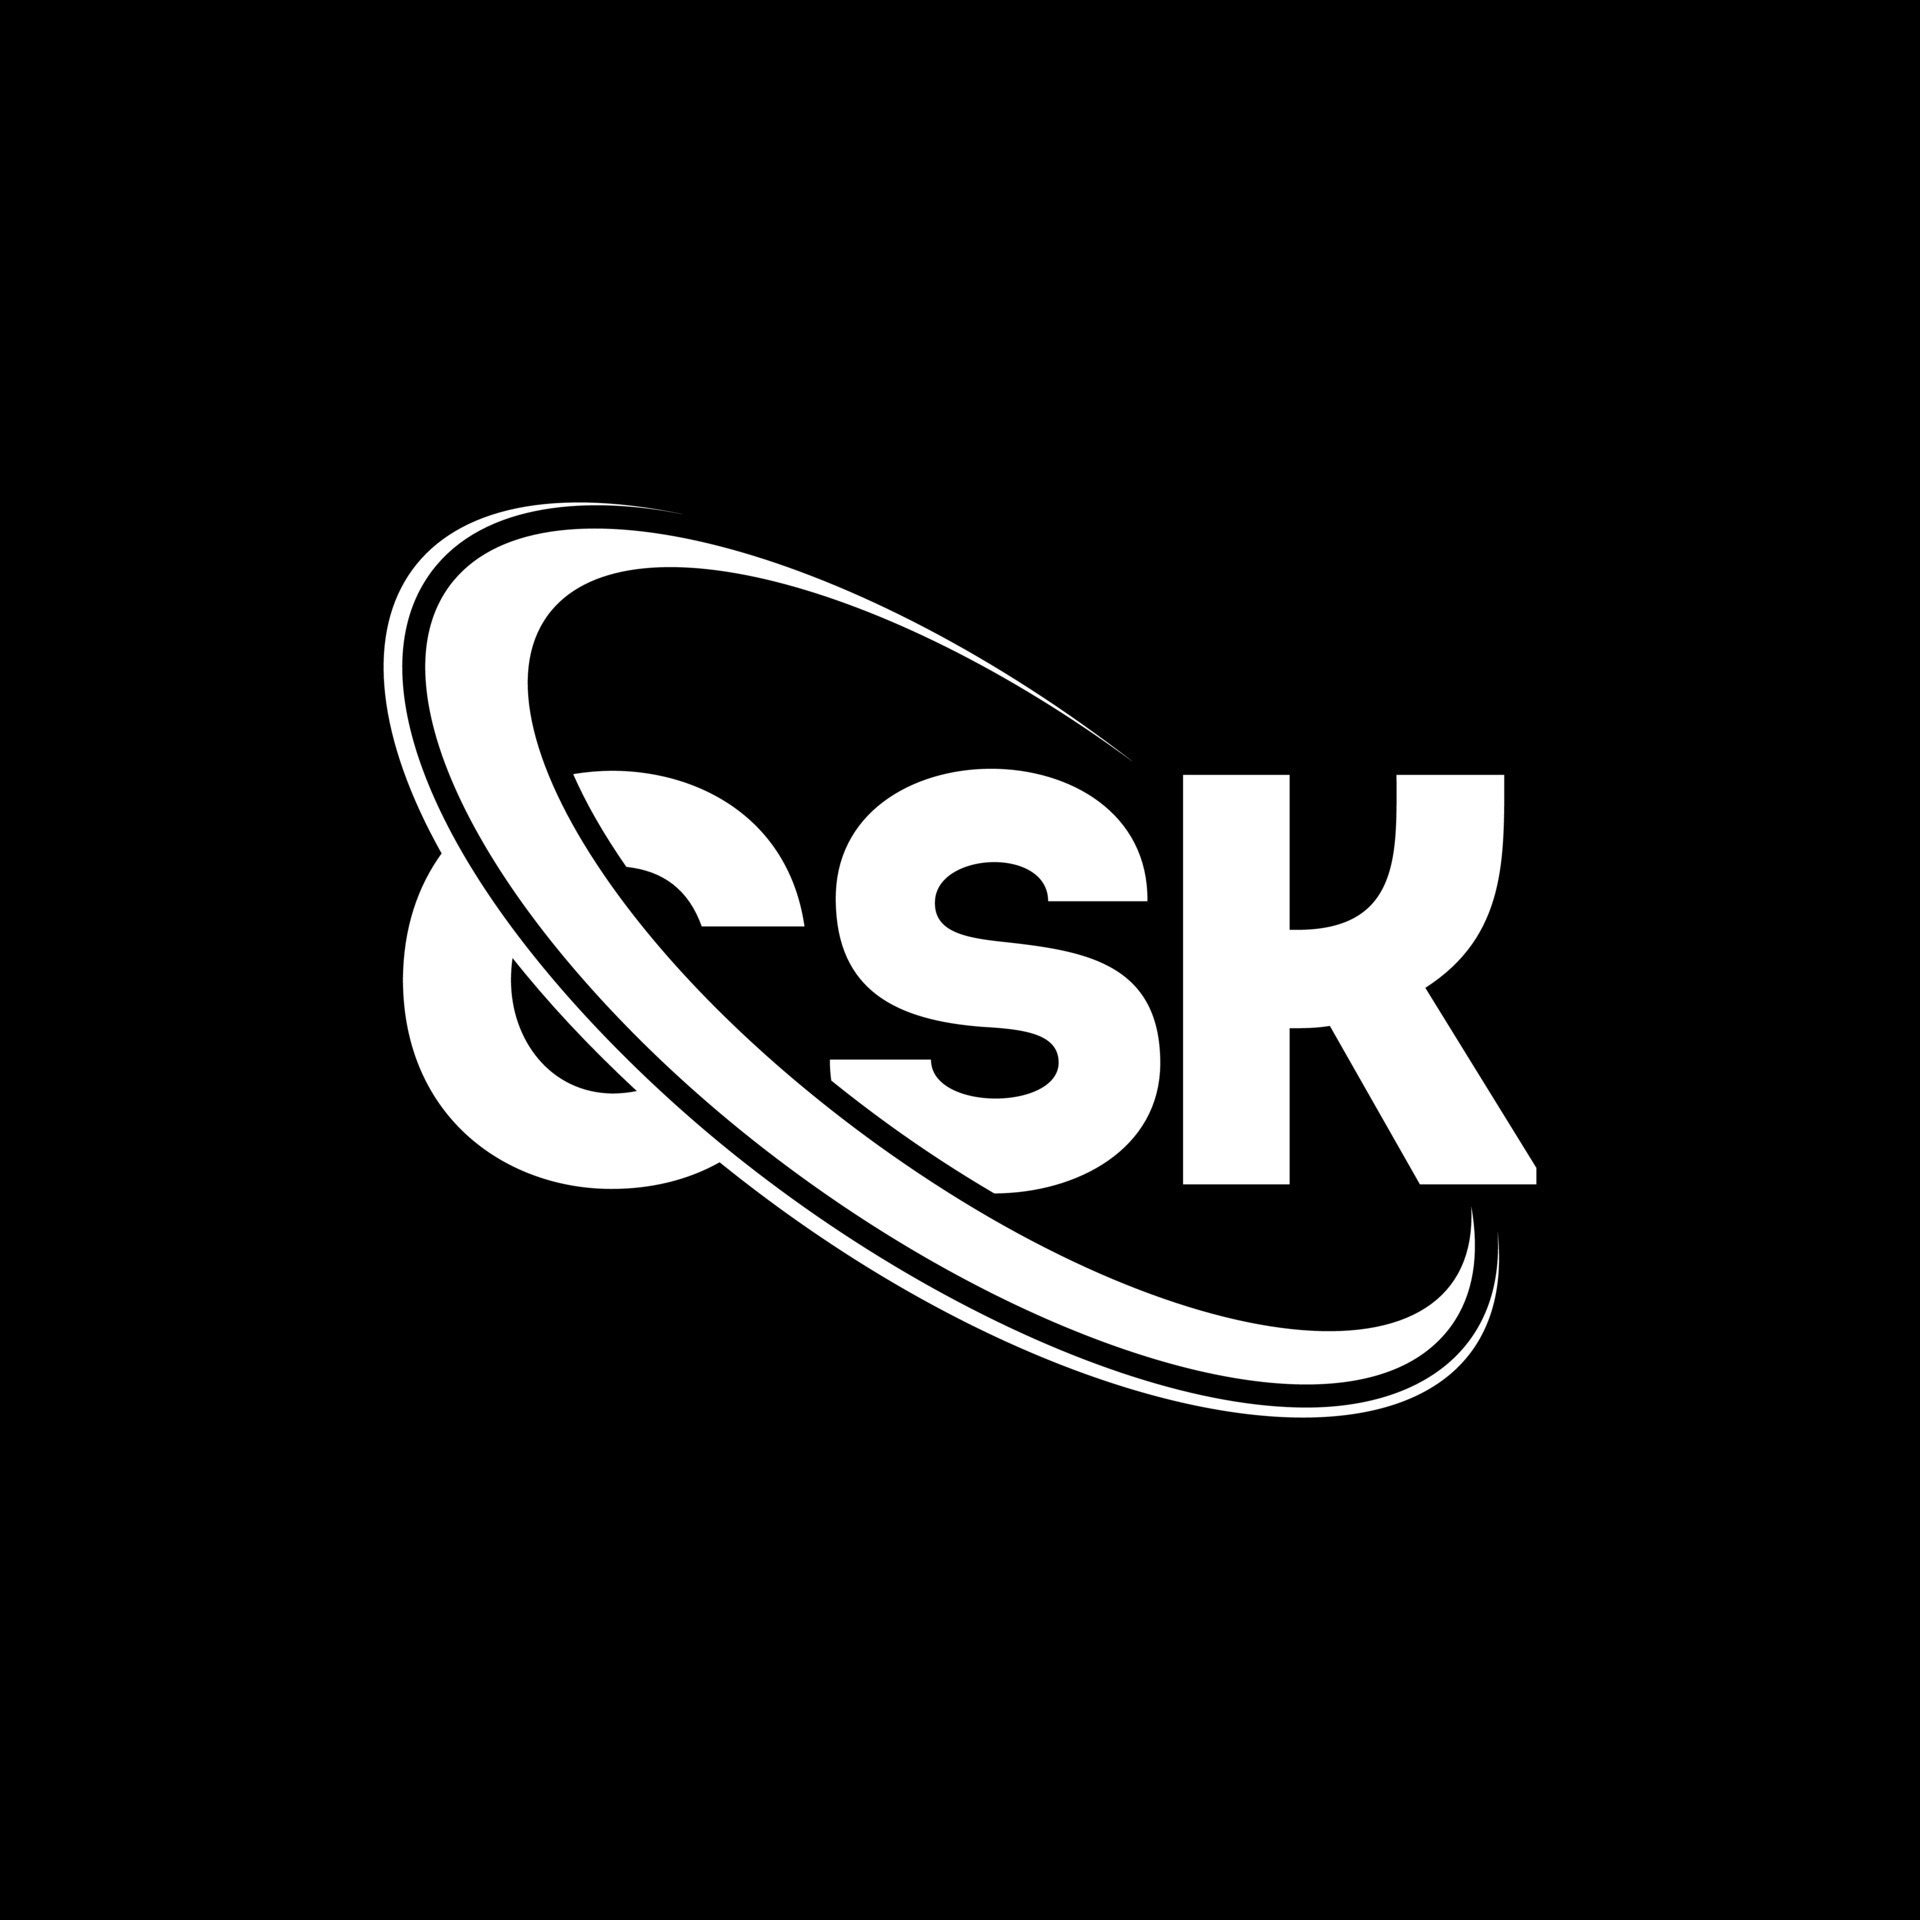 Csk Logo Stickers for Sale | Redbubble-nextbuild.com.vn